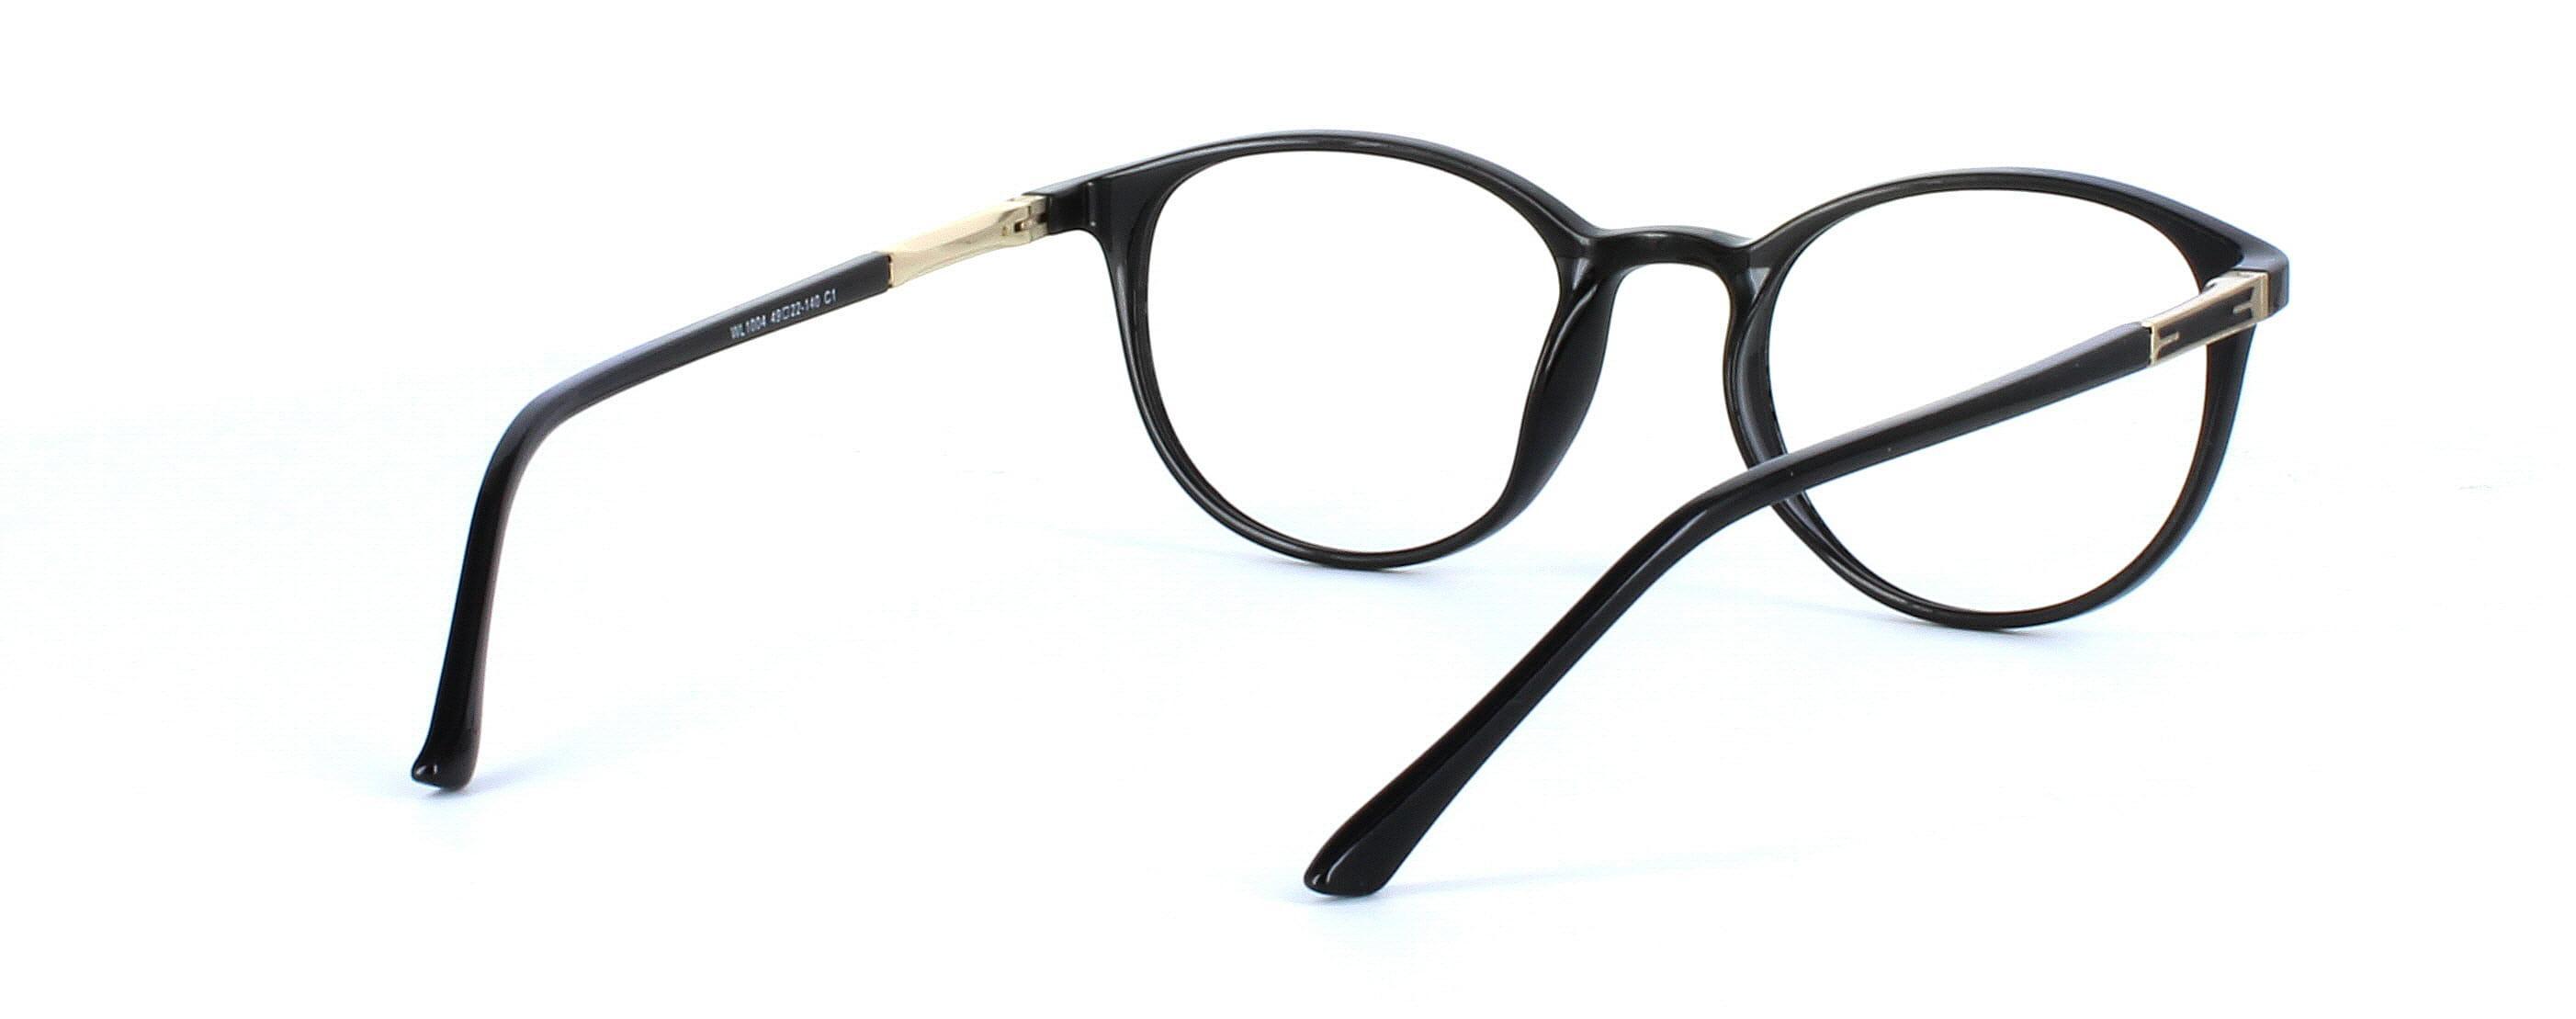 Mensa - Ladies black round shaped plastic glasses - image view 4